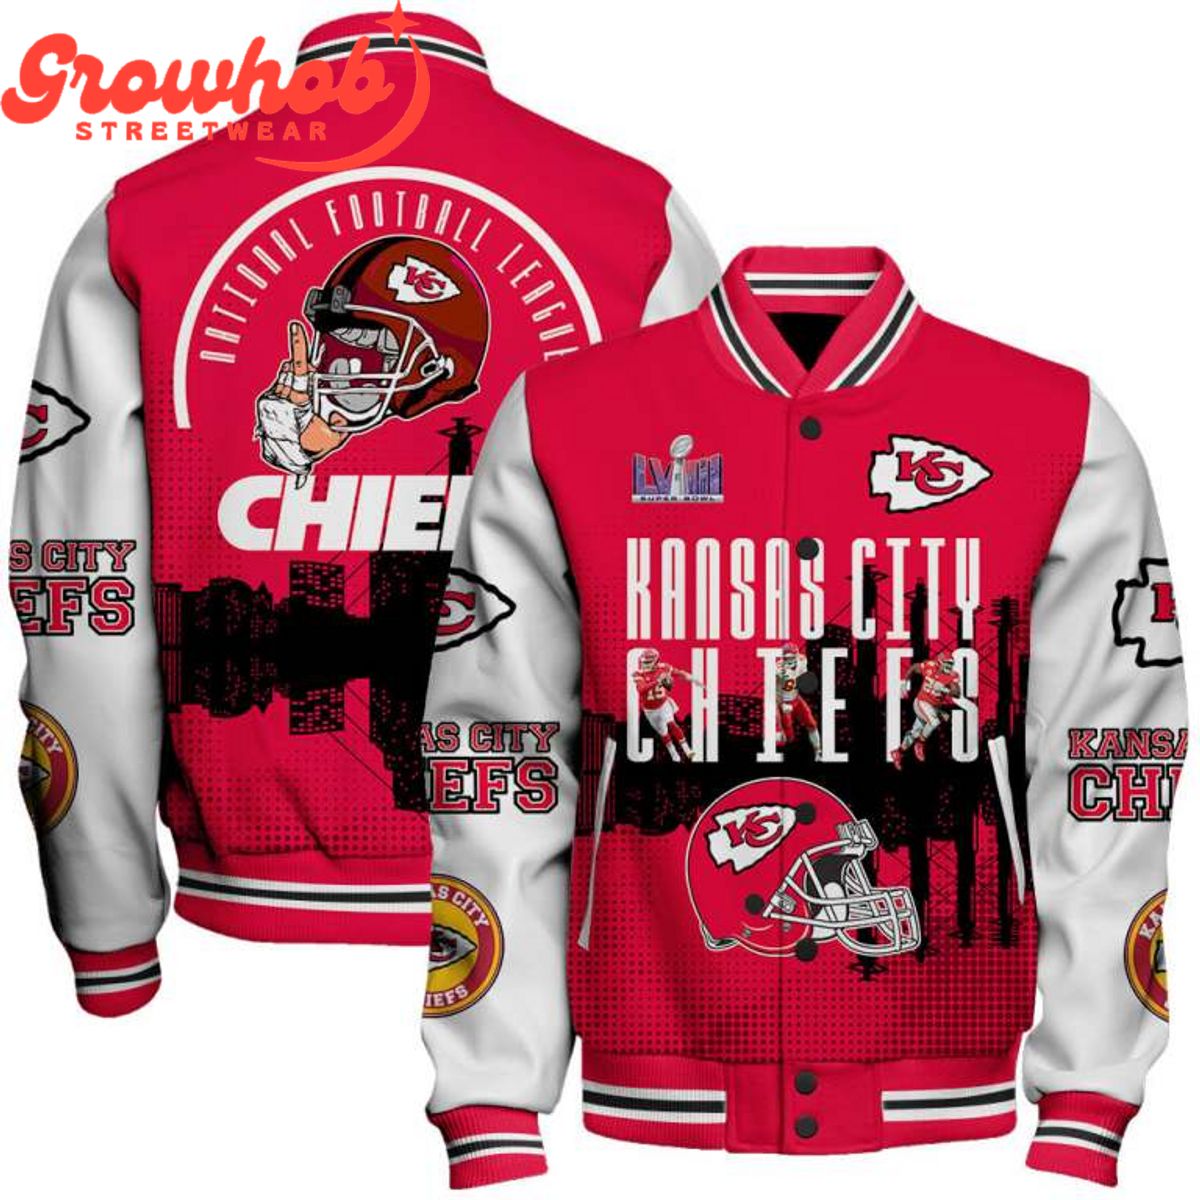 Kansas City Chiefs NFL Conference Champions Baseball Jacket